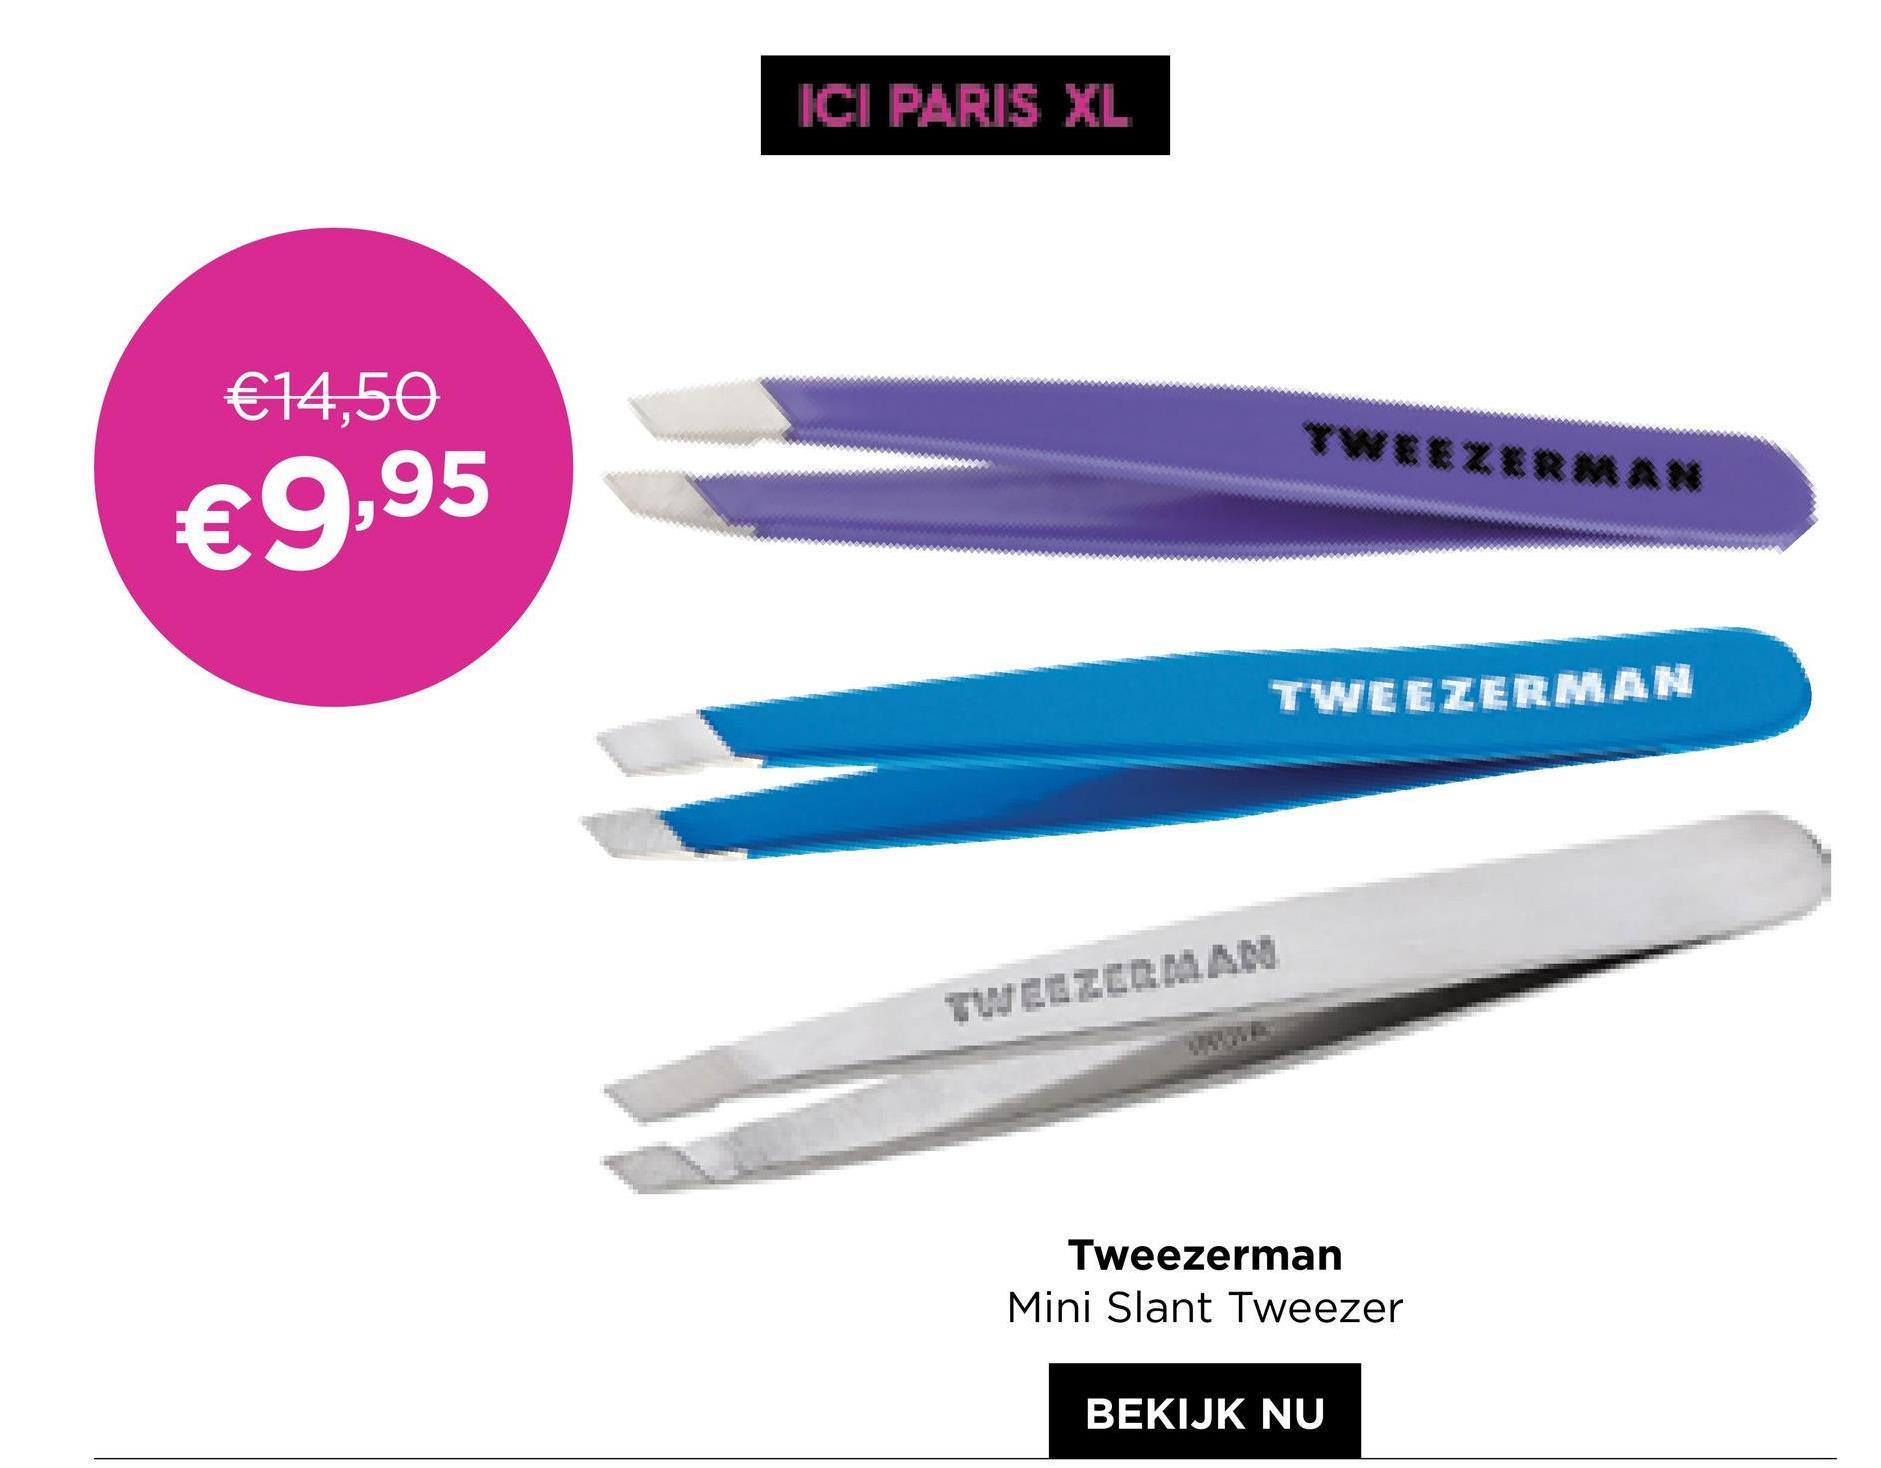 ICI PARIS XL
€14,50
TWEEZERMAN
€9,95
TWEEZERMAN
TWEEZERMAL
Tweezerman
Mini Slant Tweezer
BEKIJK NU
